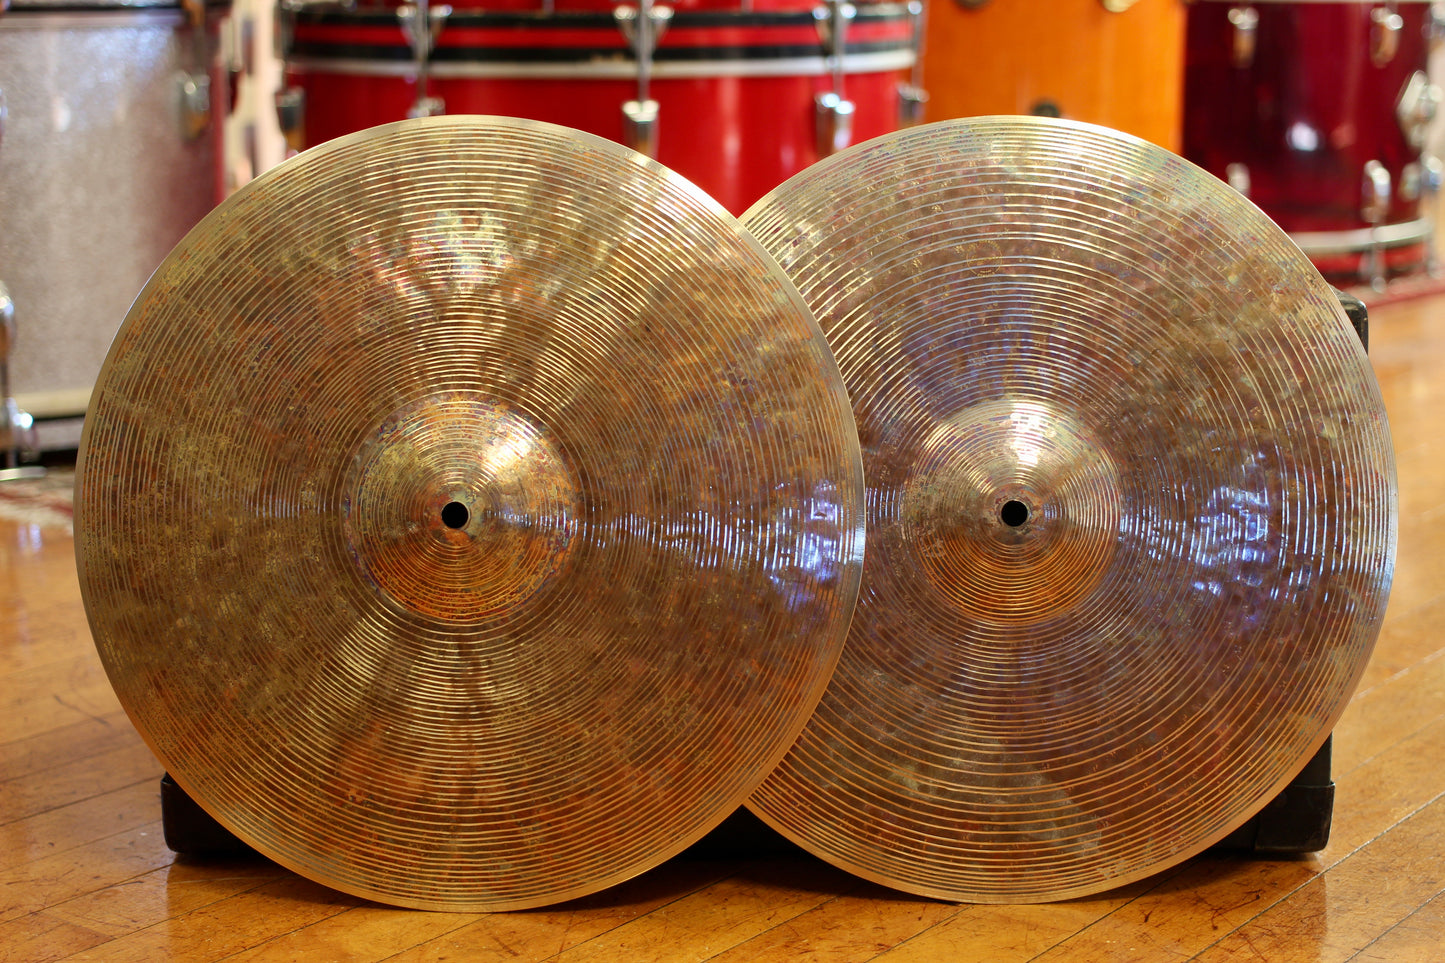 Byrne Quarter Turk 15” Hi-Hat Cymbals 1130/1260g